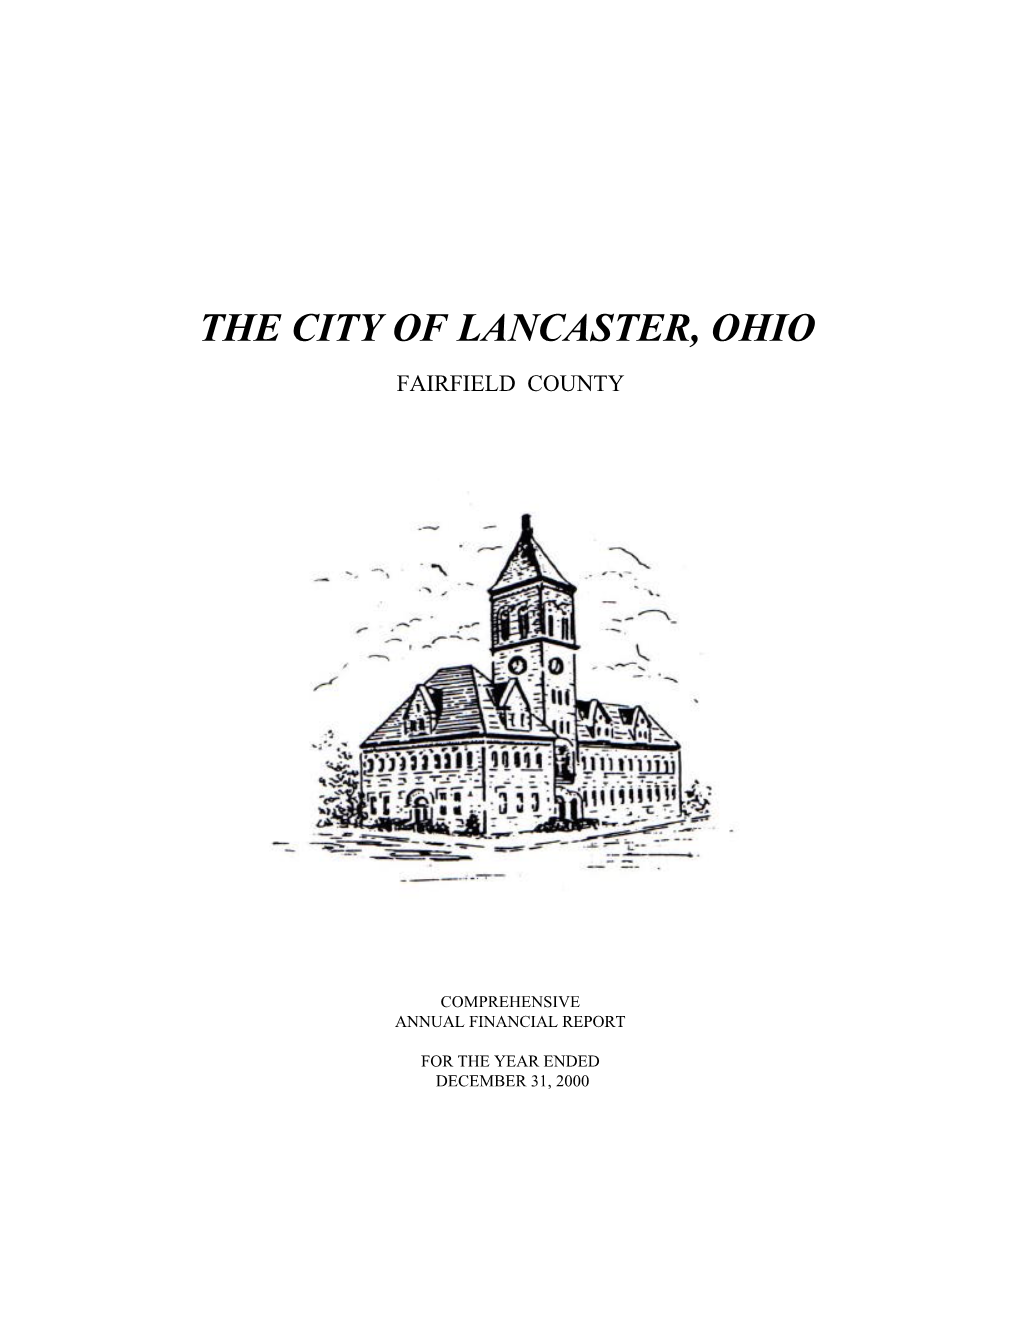 The City of Lancaster, Ohio Fairfield County